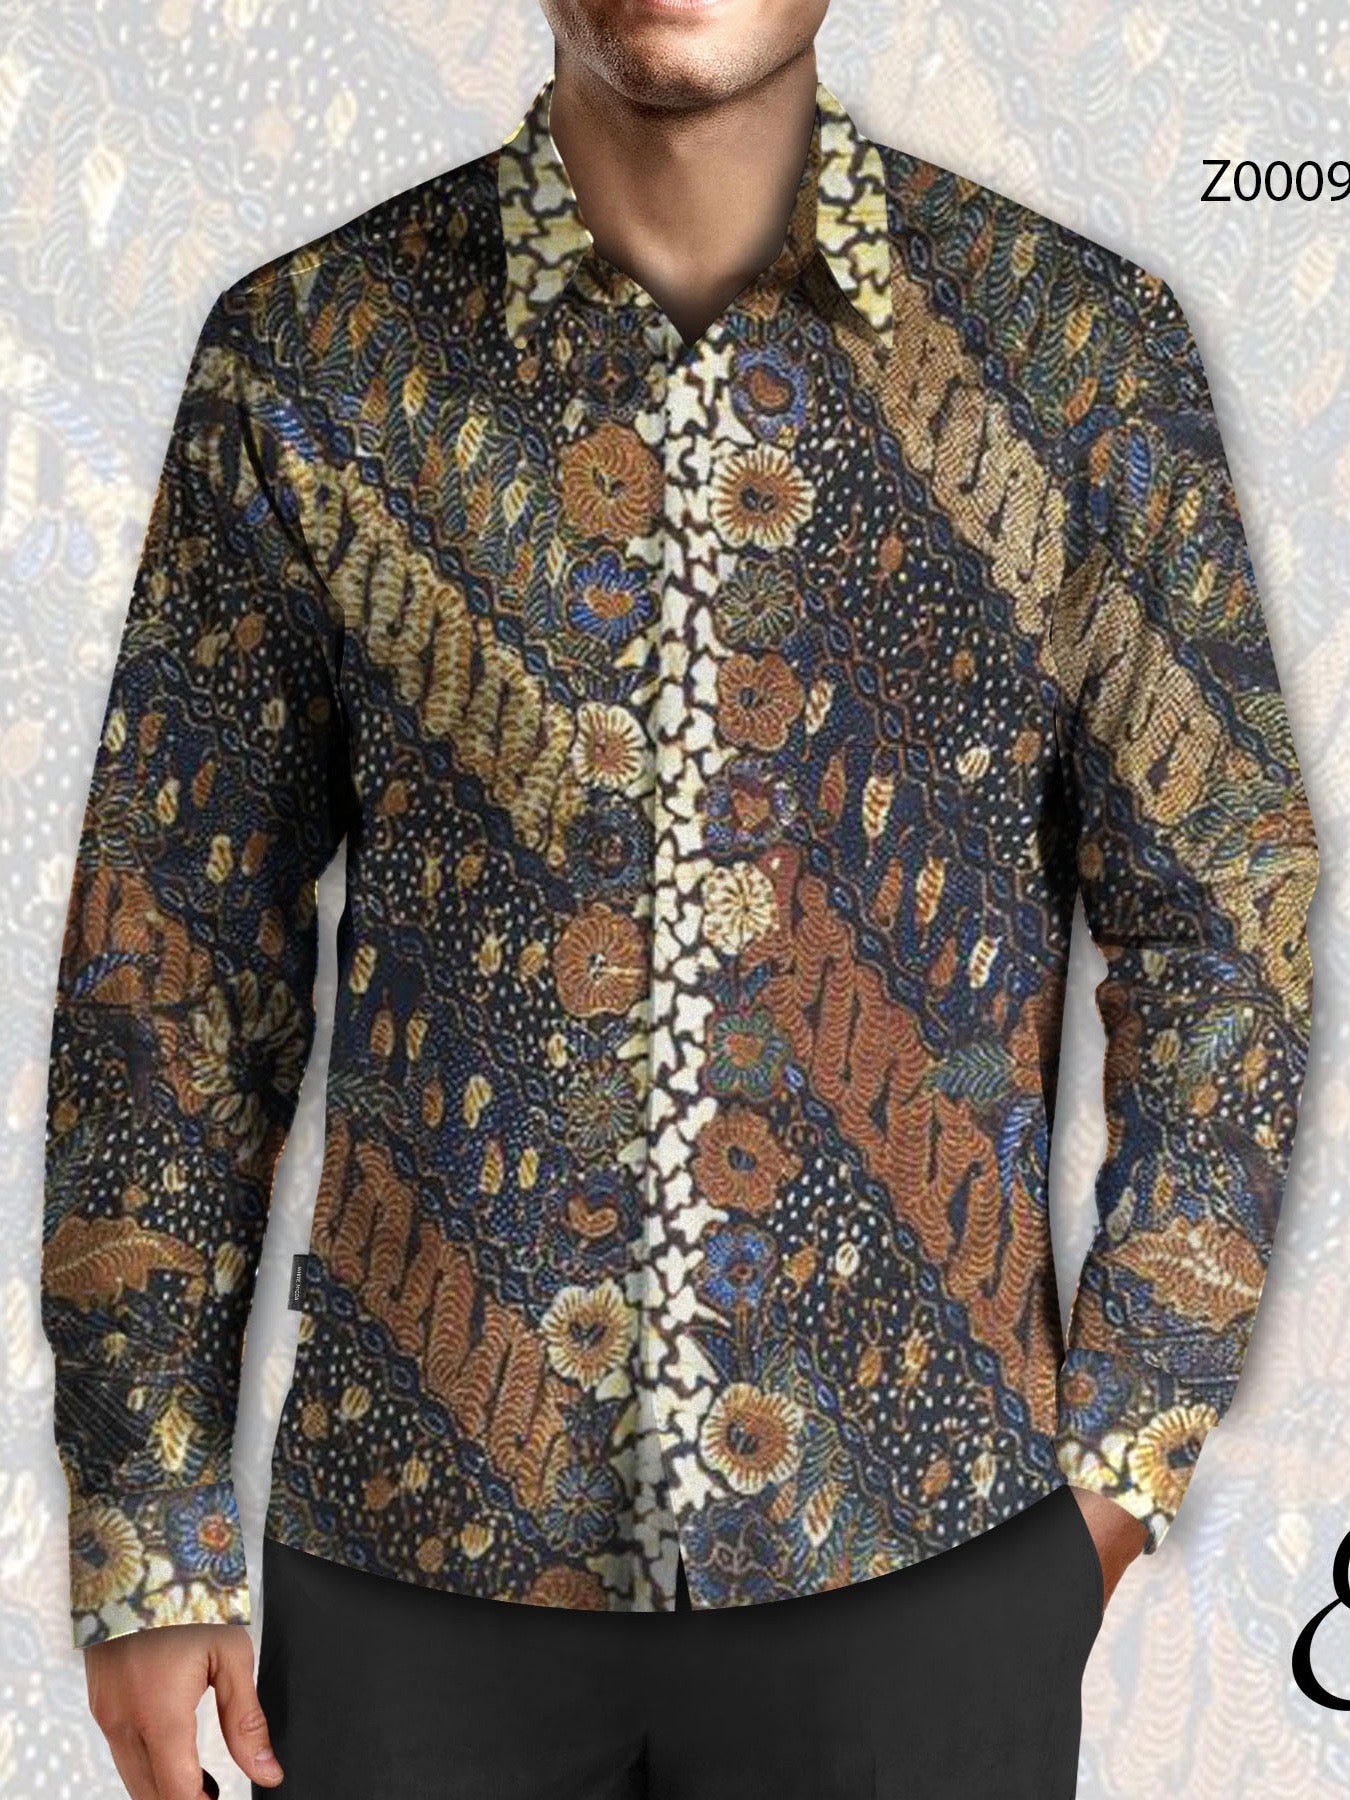 Batik Tulis Tulungagung KD-Z0009-16